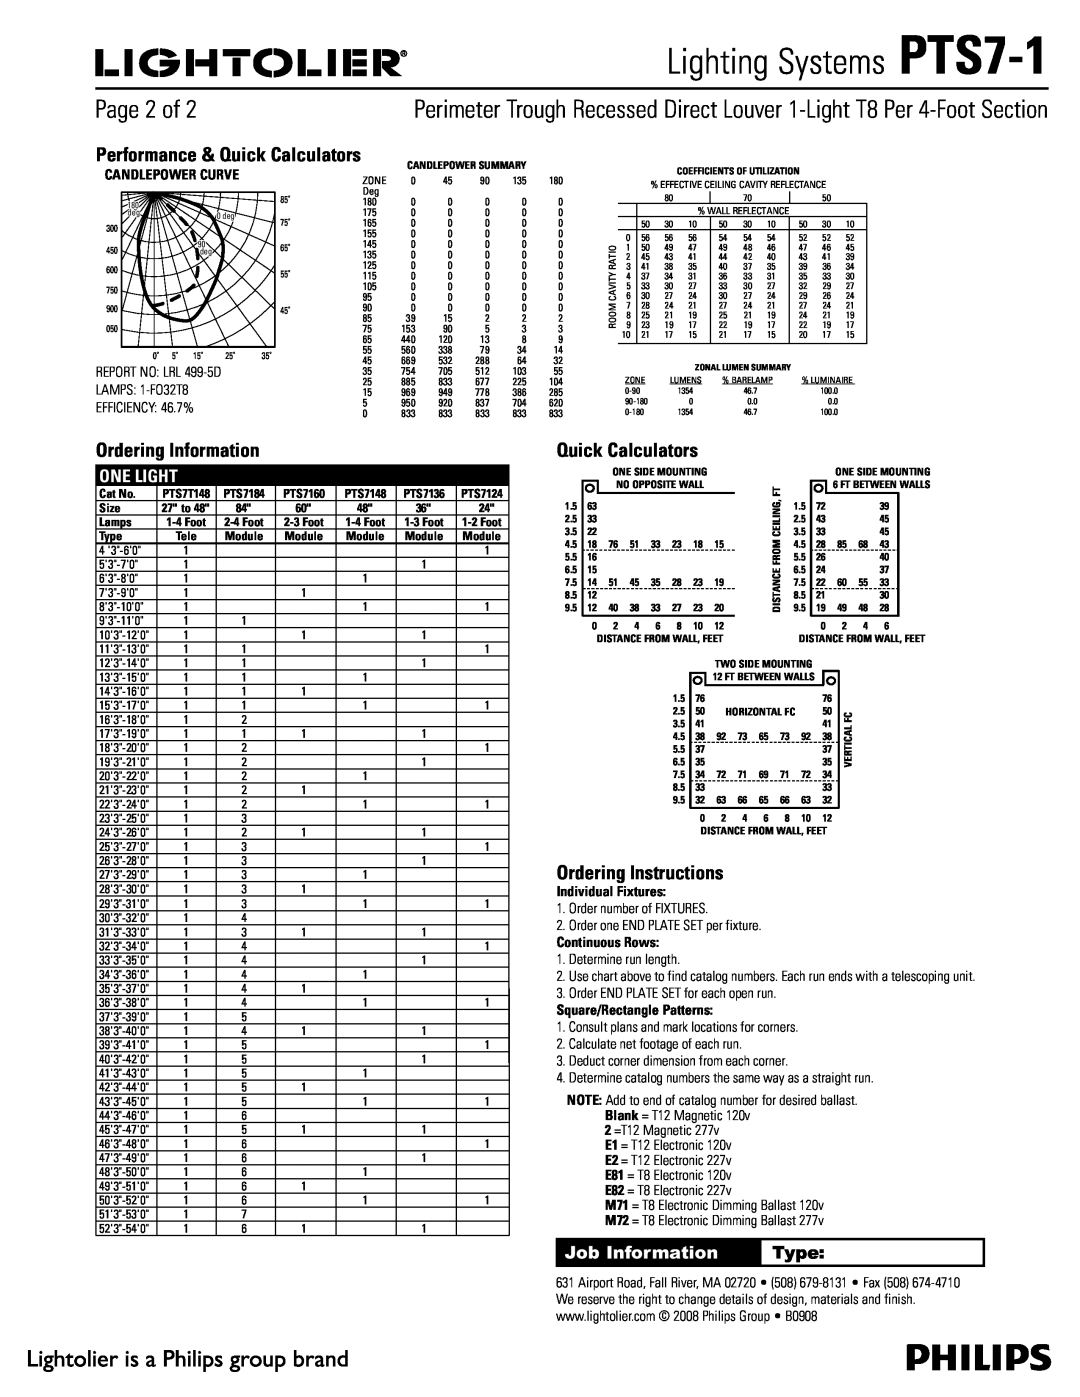 Lightolier PTS7-1 Ordering Information, Quick Calculators, Ordering Instructions, One Light, Individual Fixtures, Type 